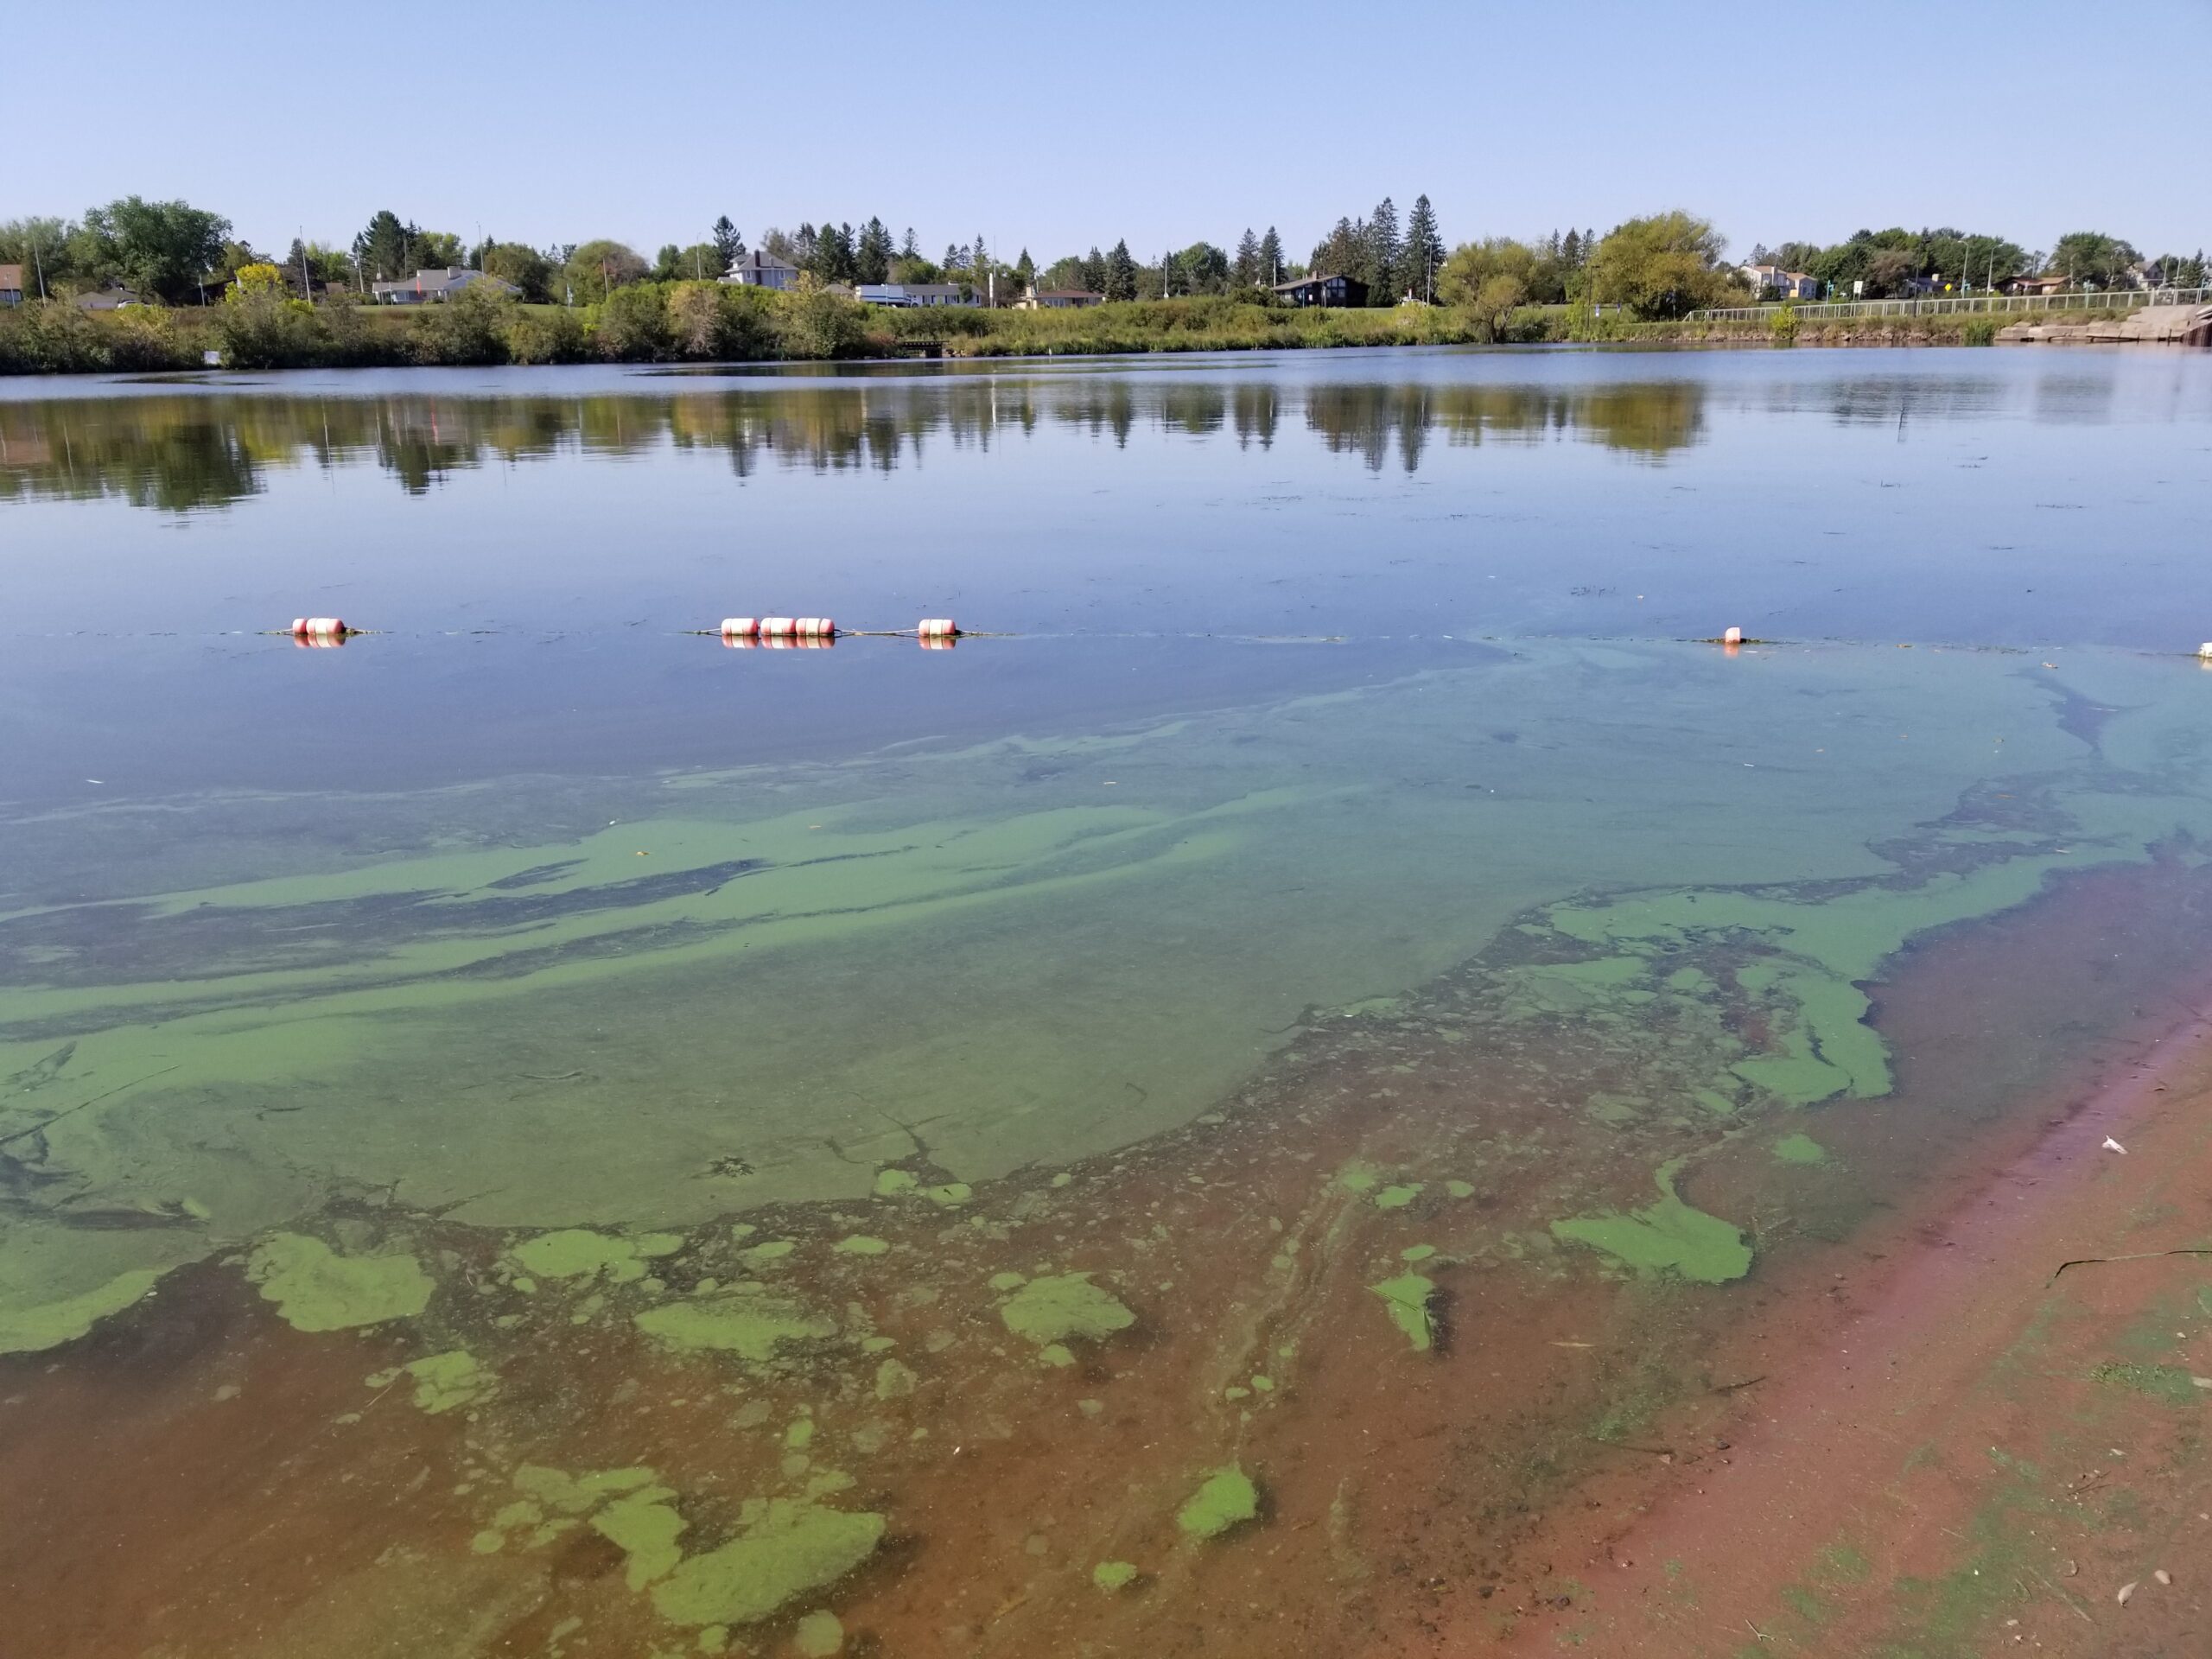 Water quality sampling effort in Lake Superior estuary targets emerging threats from harmful algal blooms